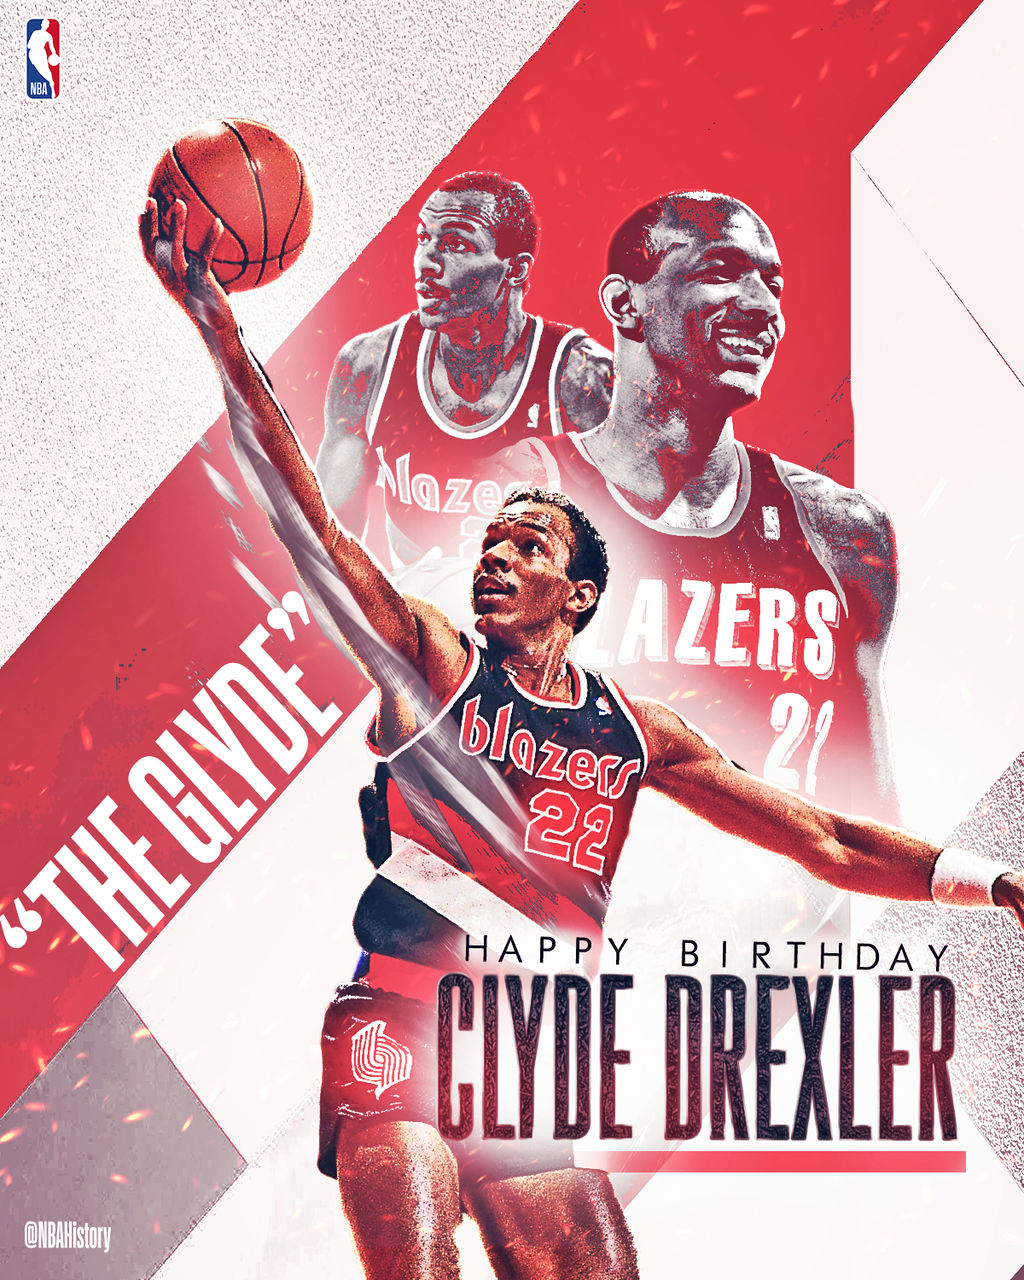 Clyde drexler HD wallpapers